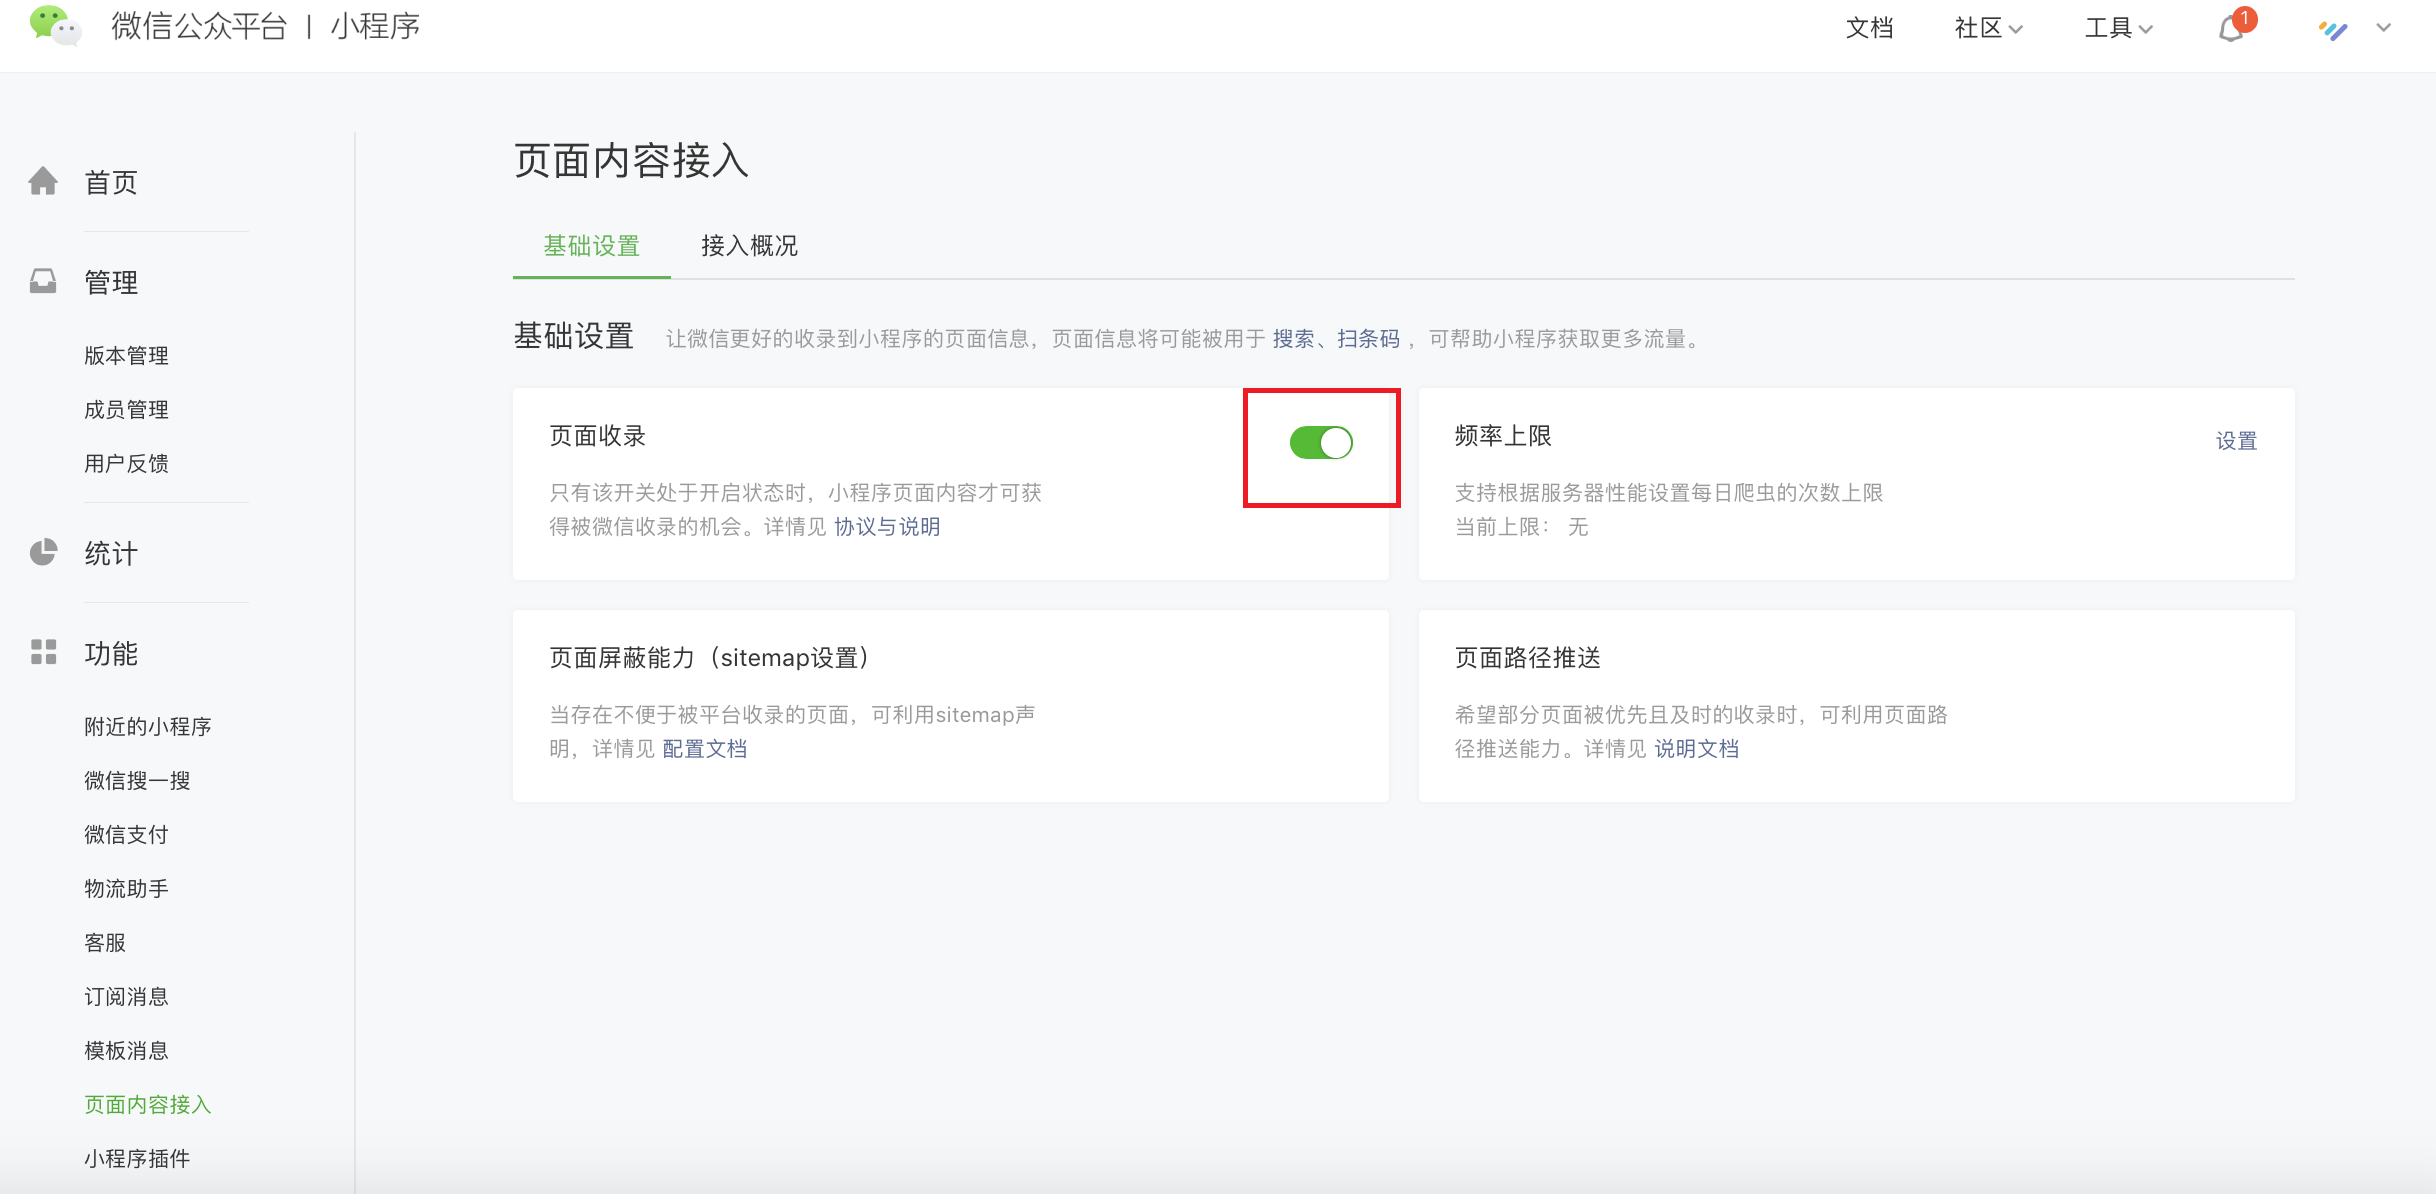 WeChat small program small program search commodity data access (inside)